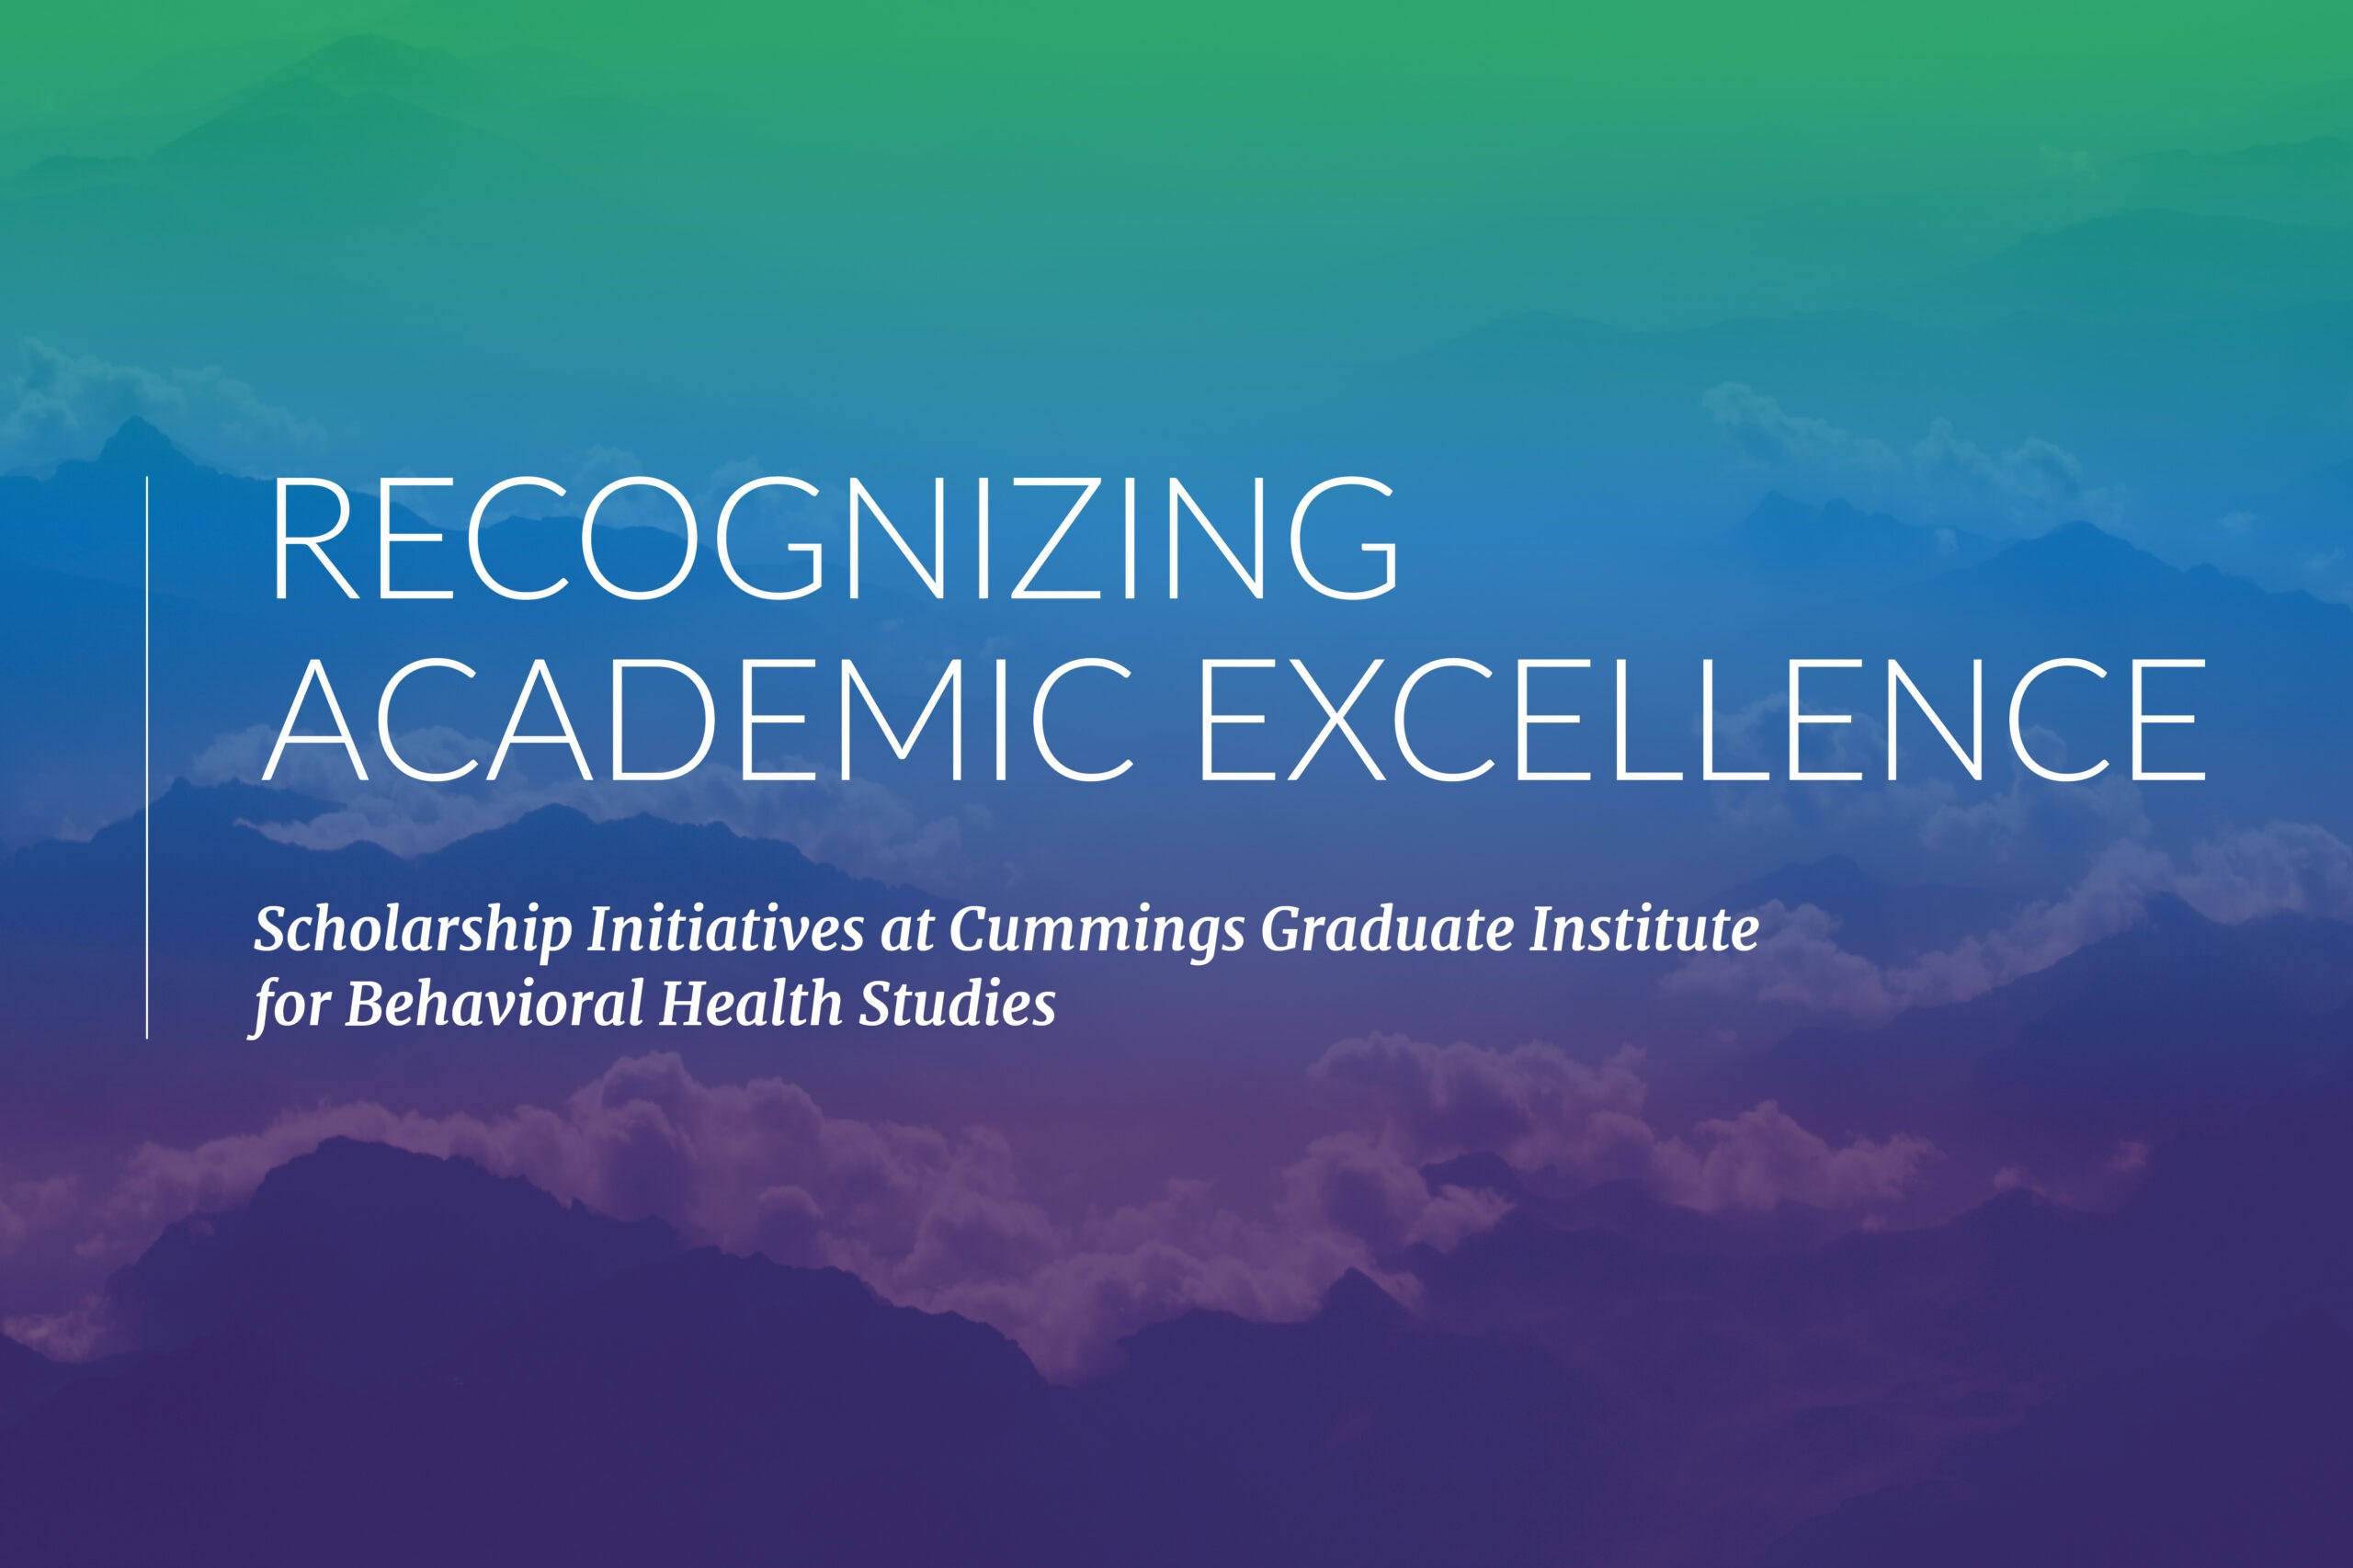 Recognizing Academic Excellence: Scholarship Initiatives at Cummings Graduate Institute for Behavioral Health Studies